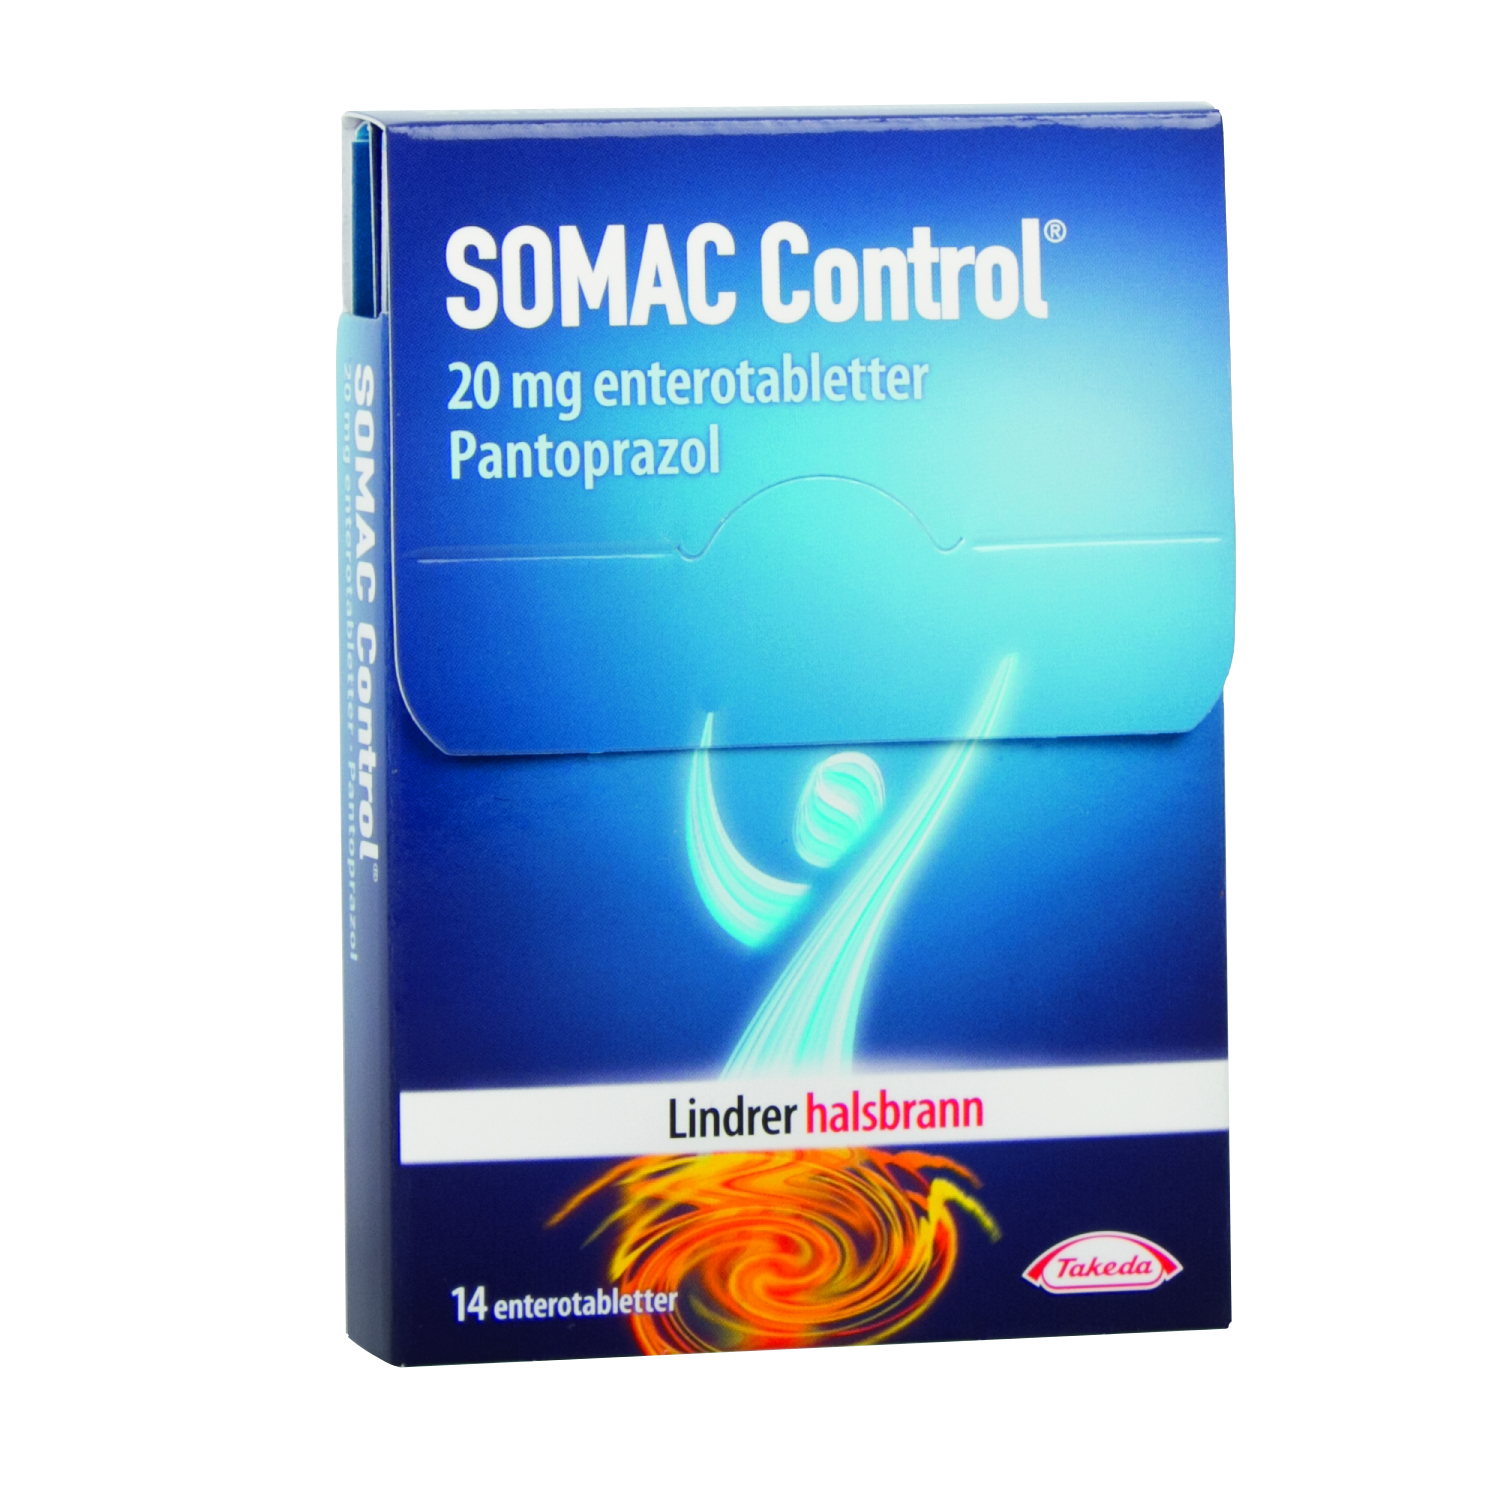 Somac Control Enterotabletter 20mg, 1 x 14 stk.